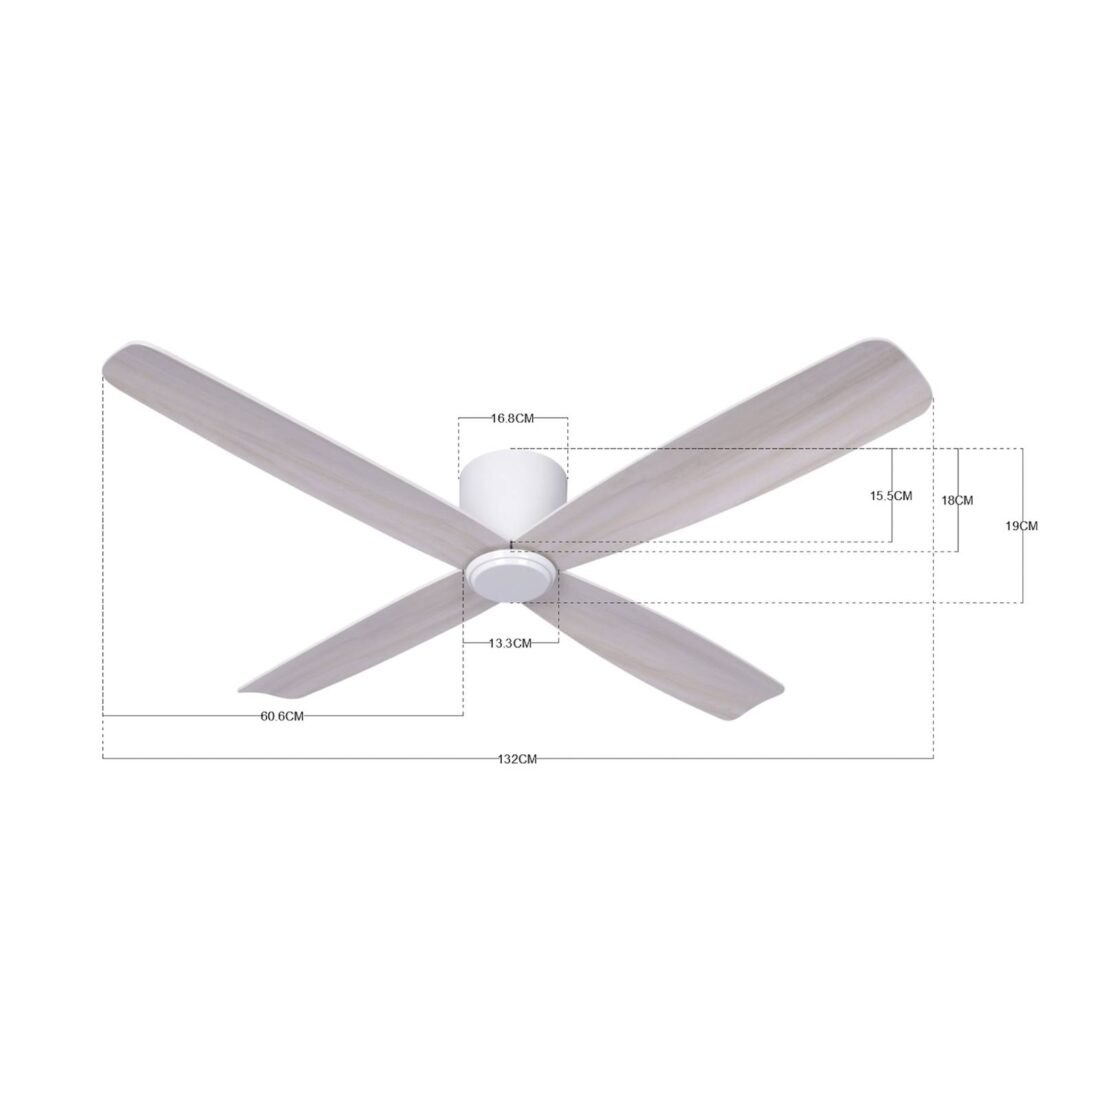 Beacon Lighting Stropní ventilátor Fraser bílý/dub DC tichý Ø 132 cm